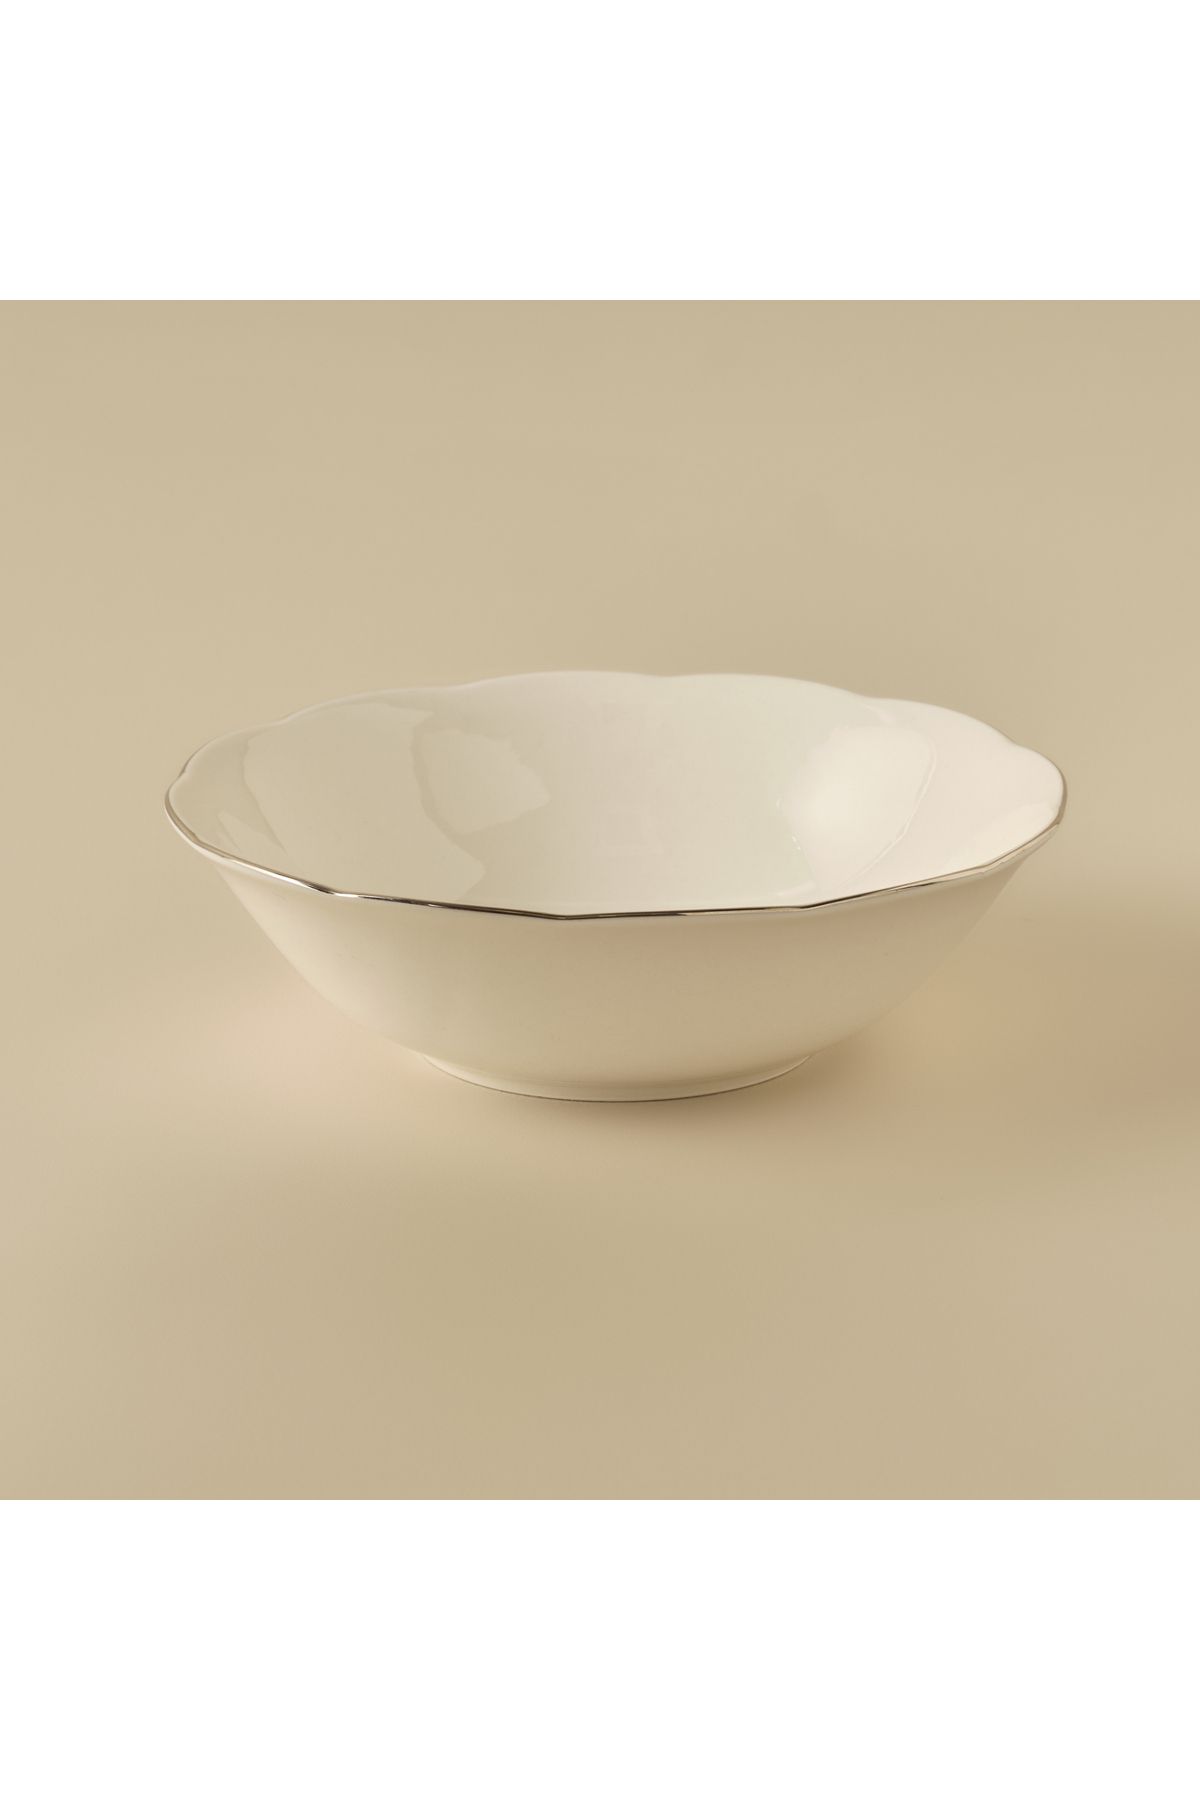 Bella Maison Clover Porselen Salata Kasesi Silver (25 cm)